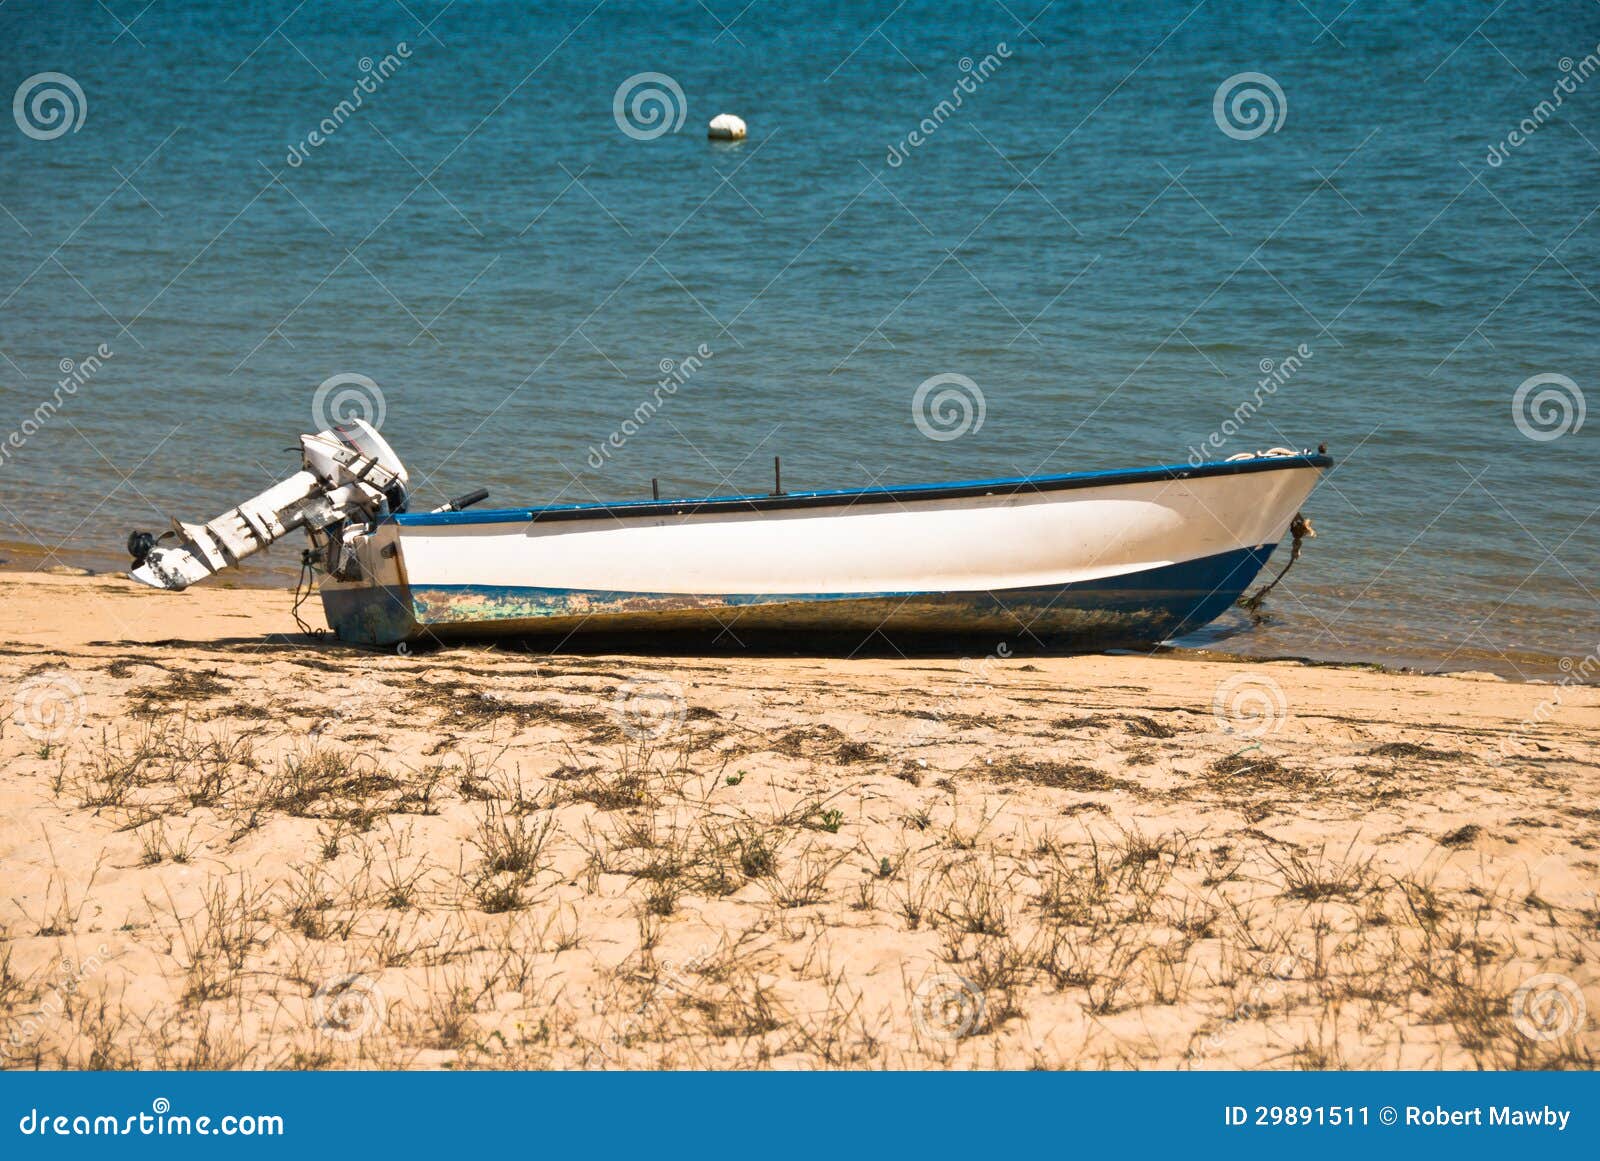 Beached Boat Stock Image - Image: 29891511